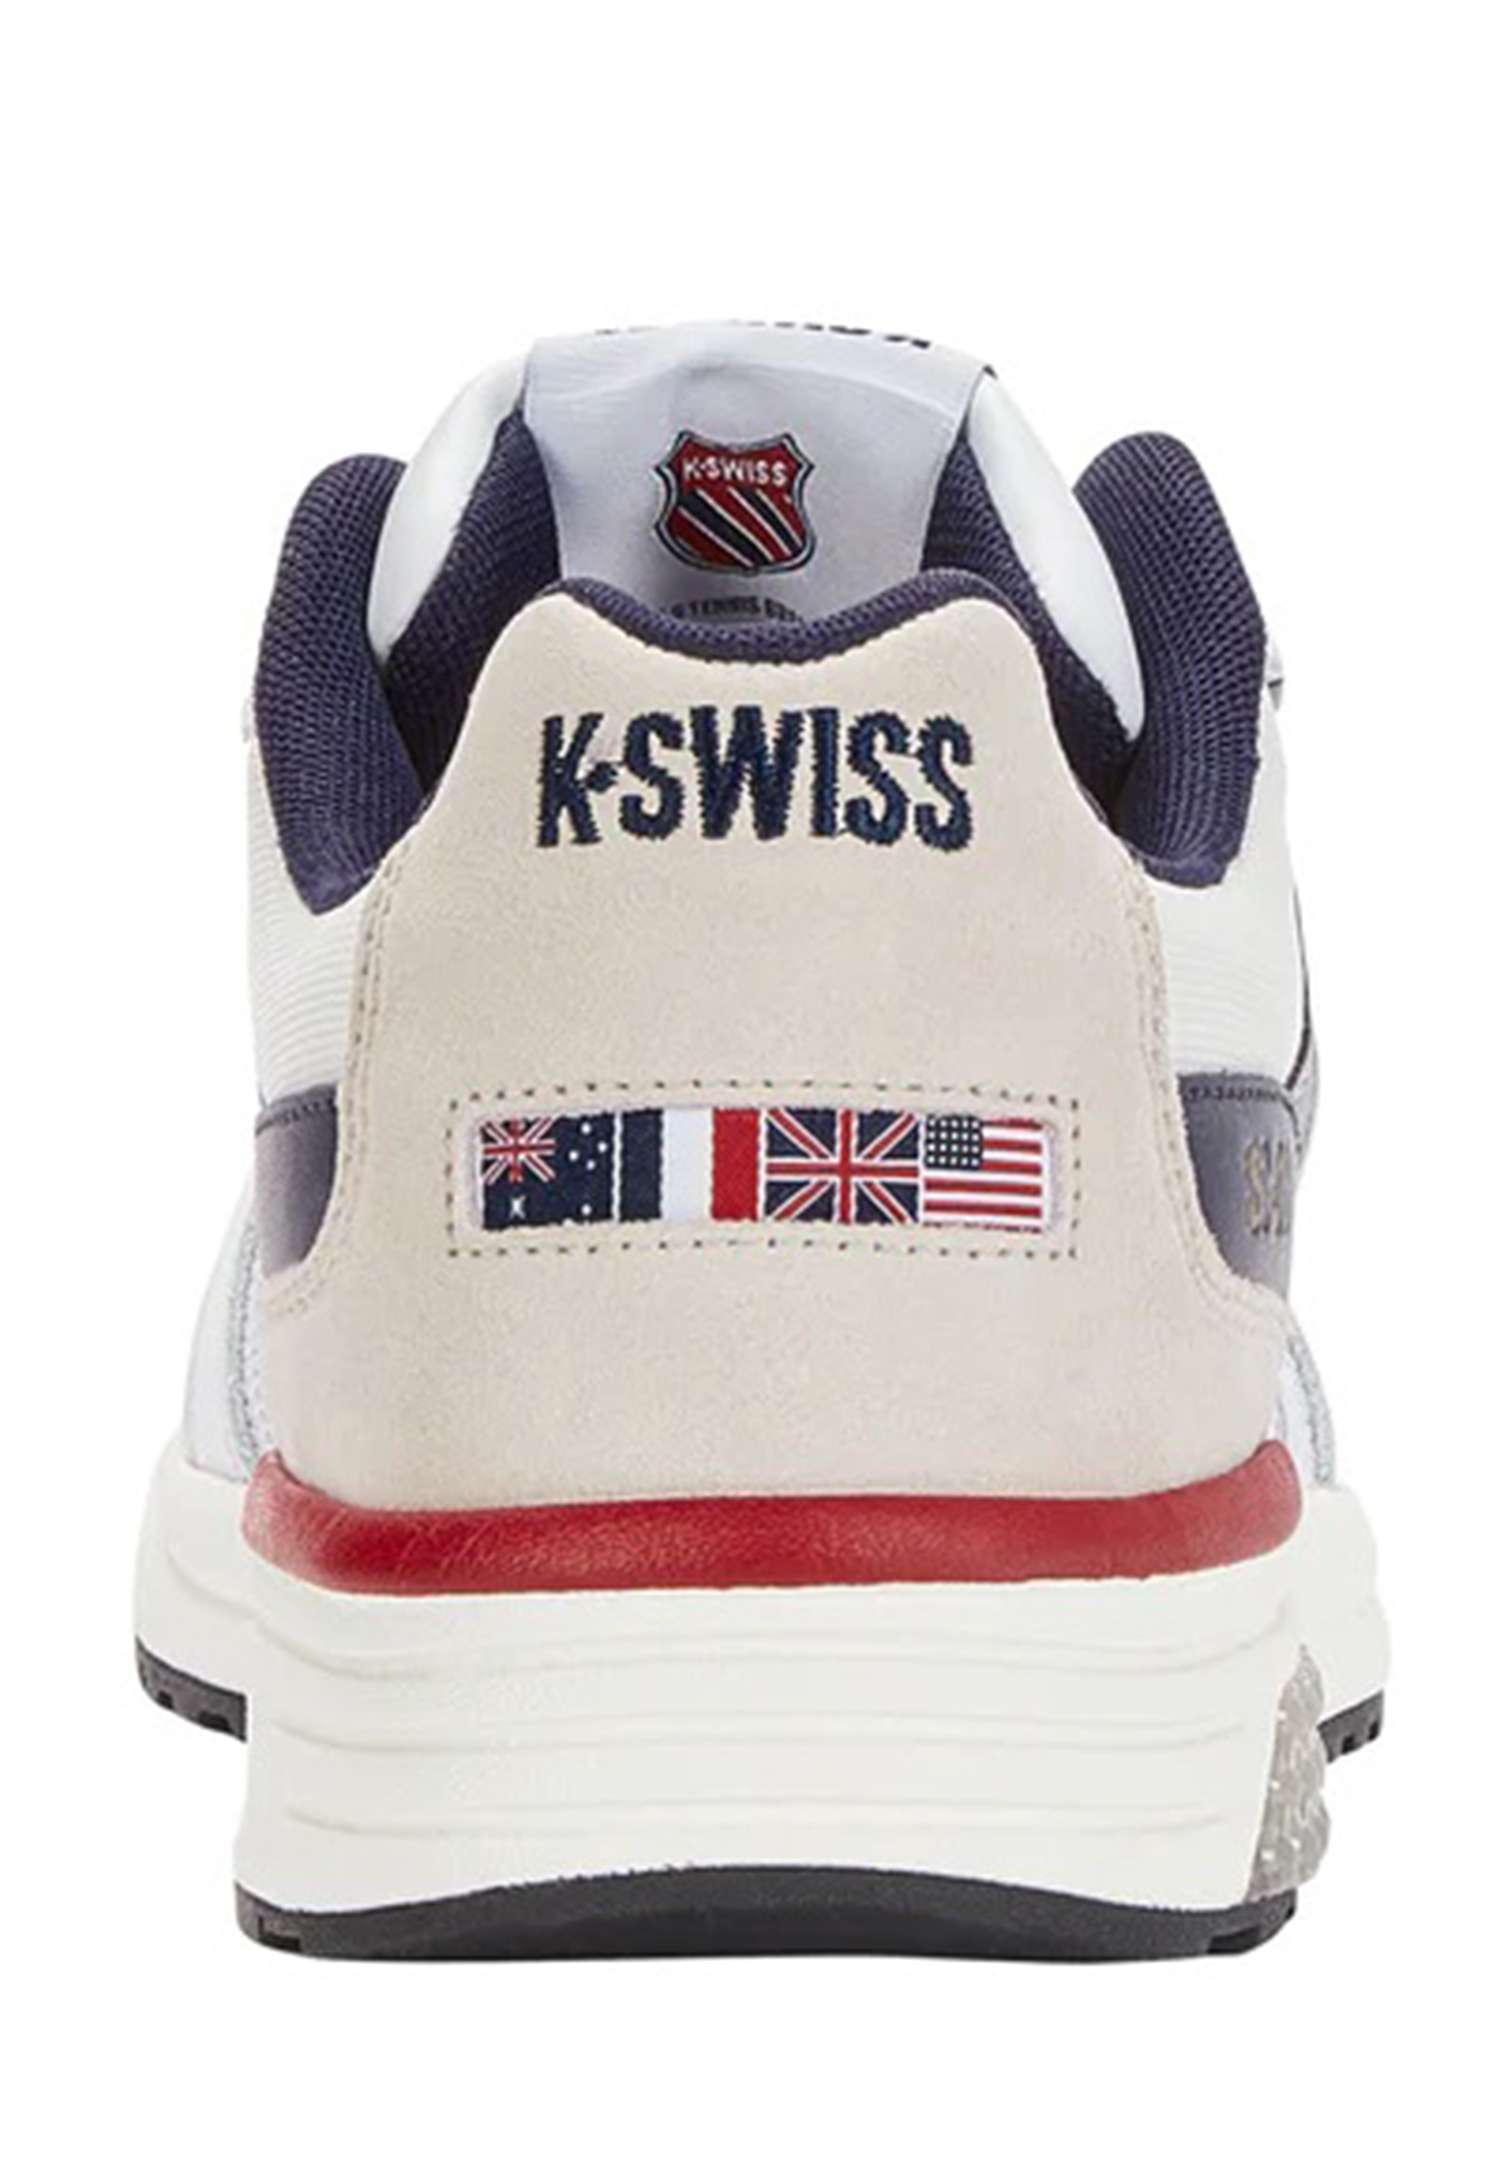 K-SWISS SI 18 RANNELL SDE USA Herren Wildleder Sneaker 08533 weiss